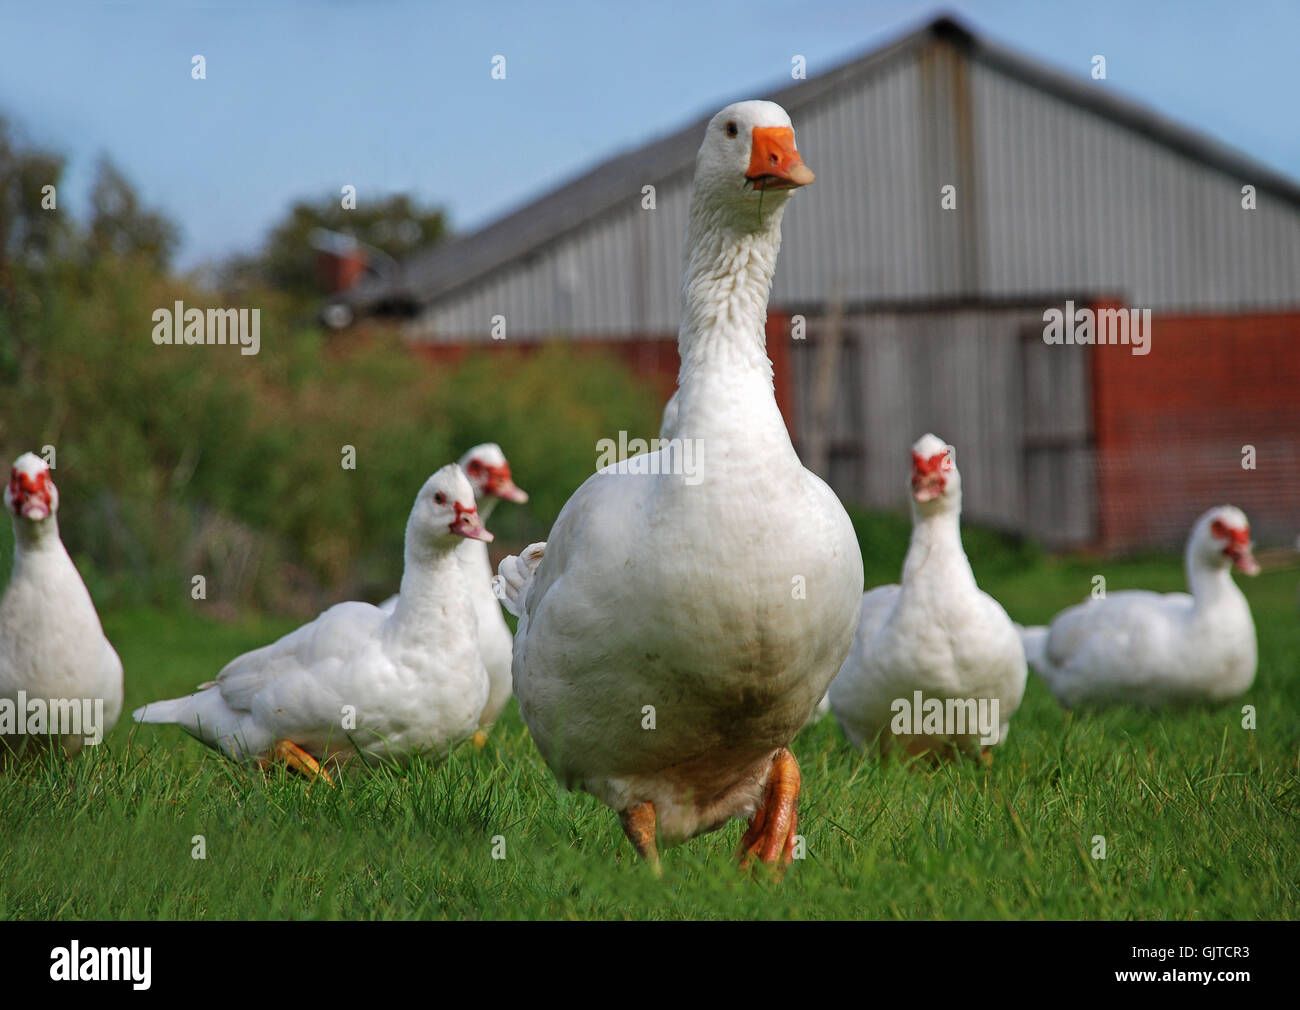 yard duck farm Stock Photo